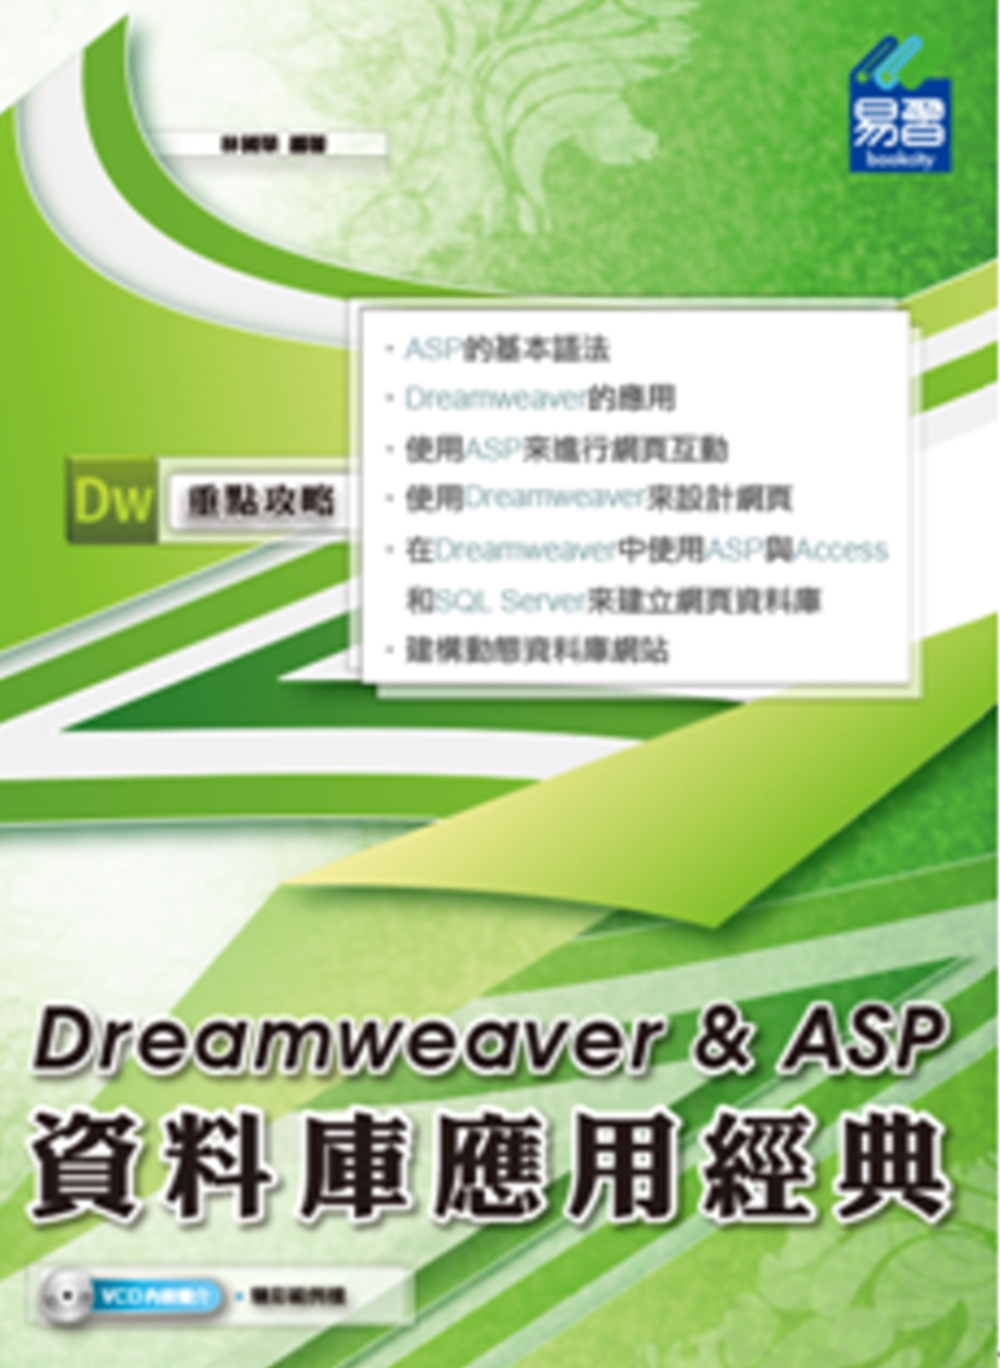 Dreamweaver & ASP 資料庫應用經典(附VCD...